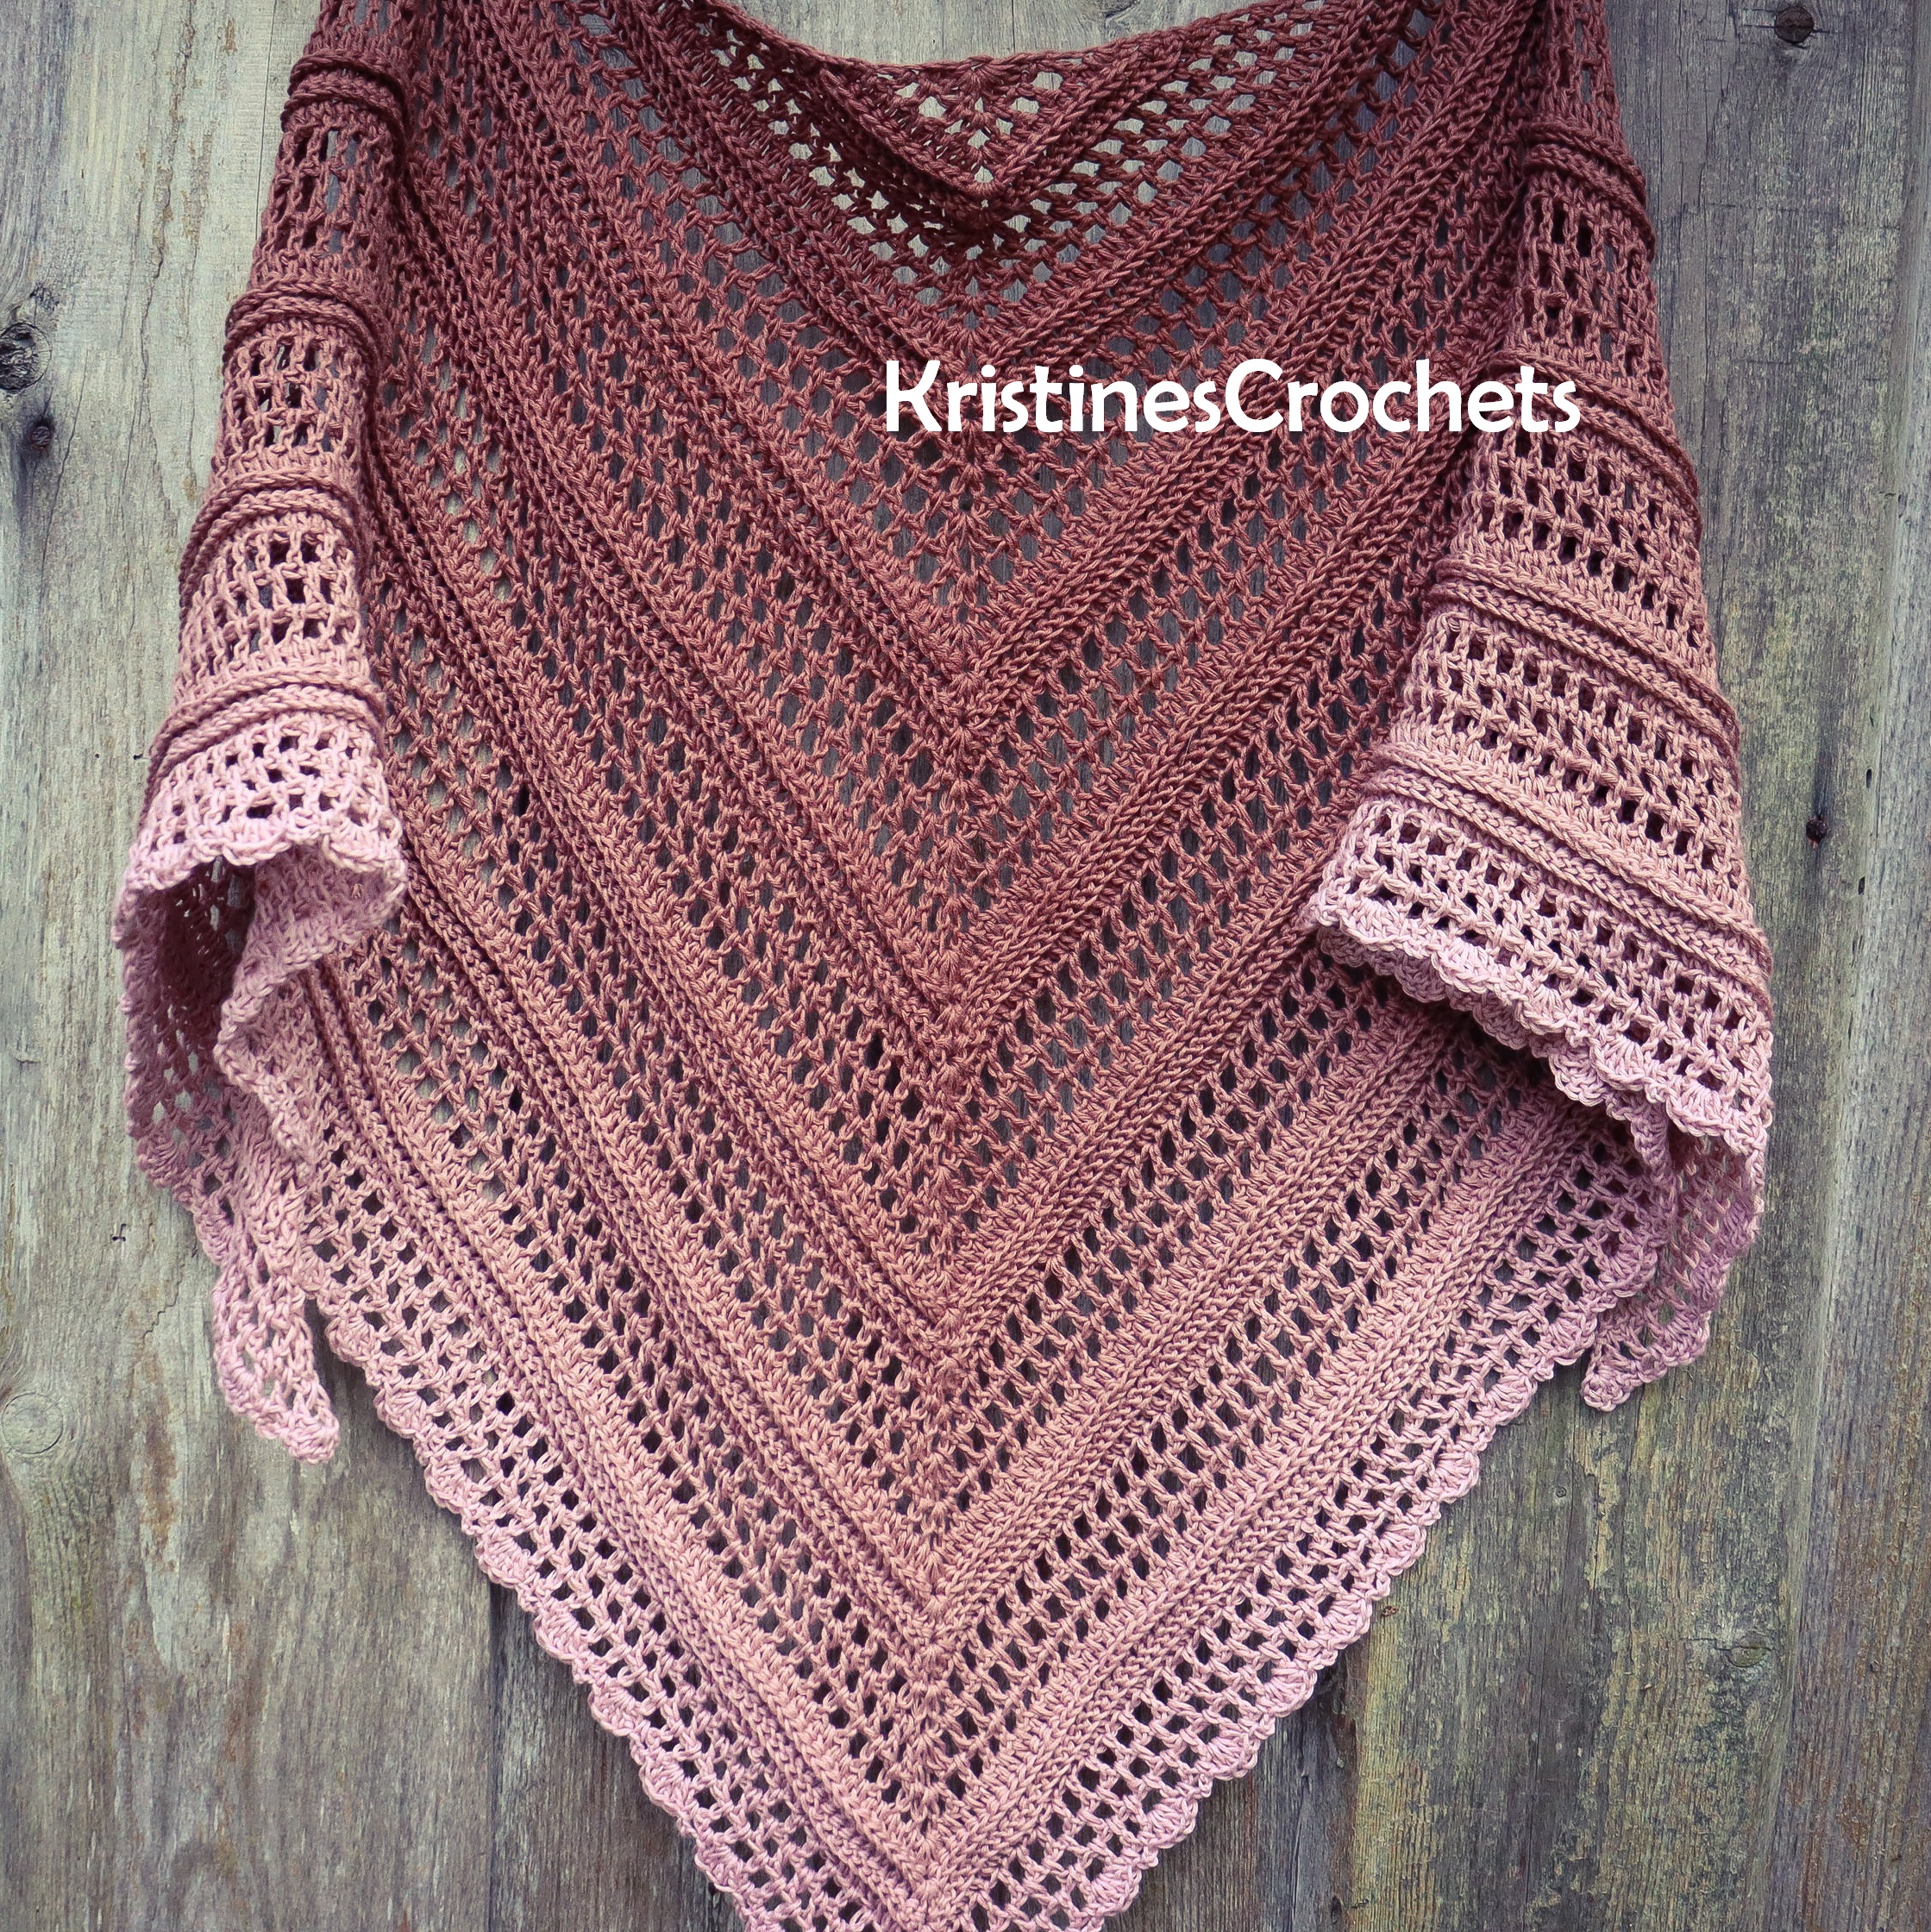 KristinesCrochets : Cocoa Latte Triangle Shawl - Free Crochet Pattern